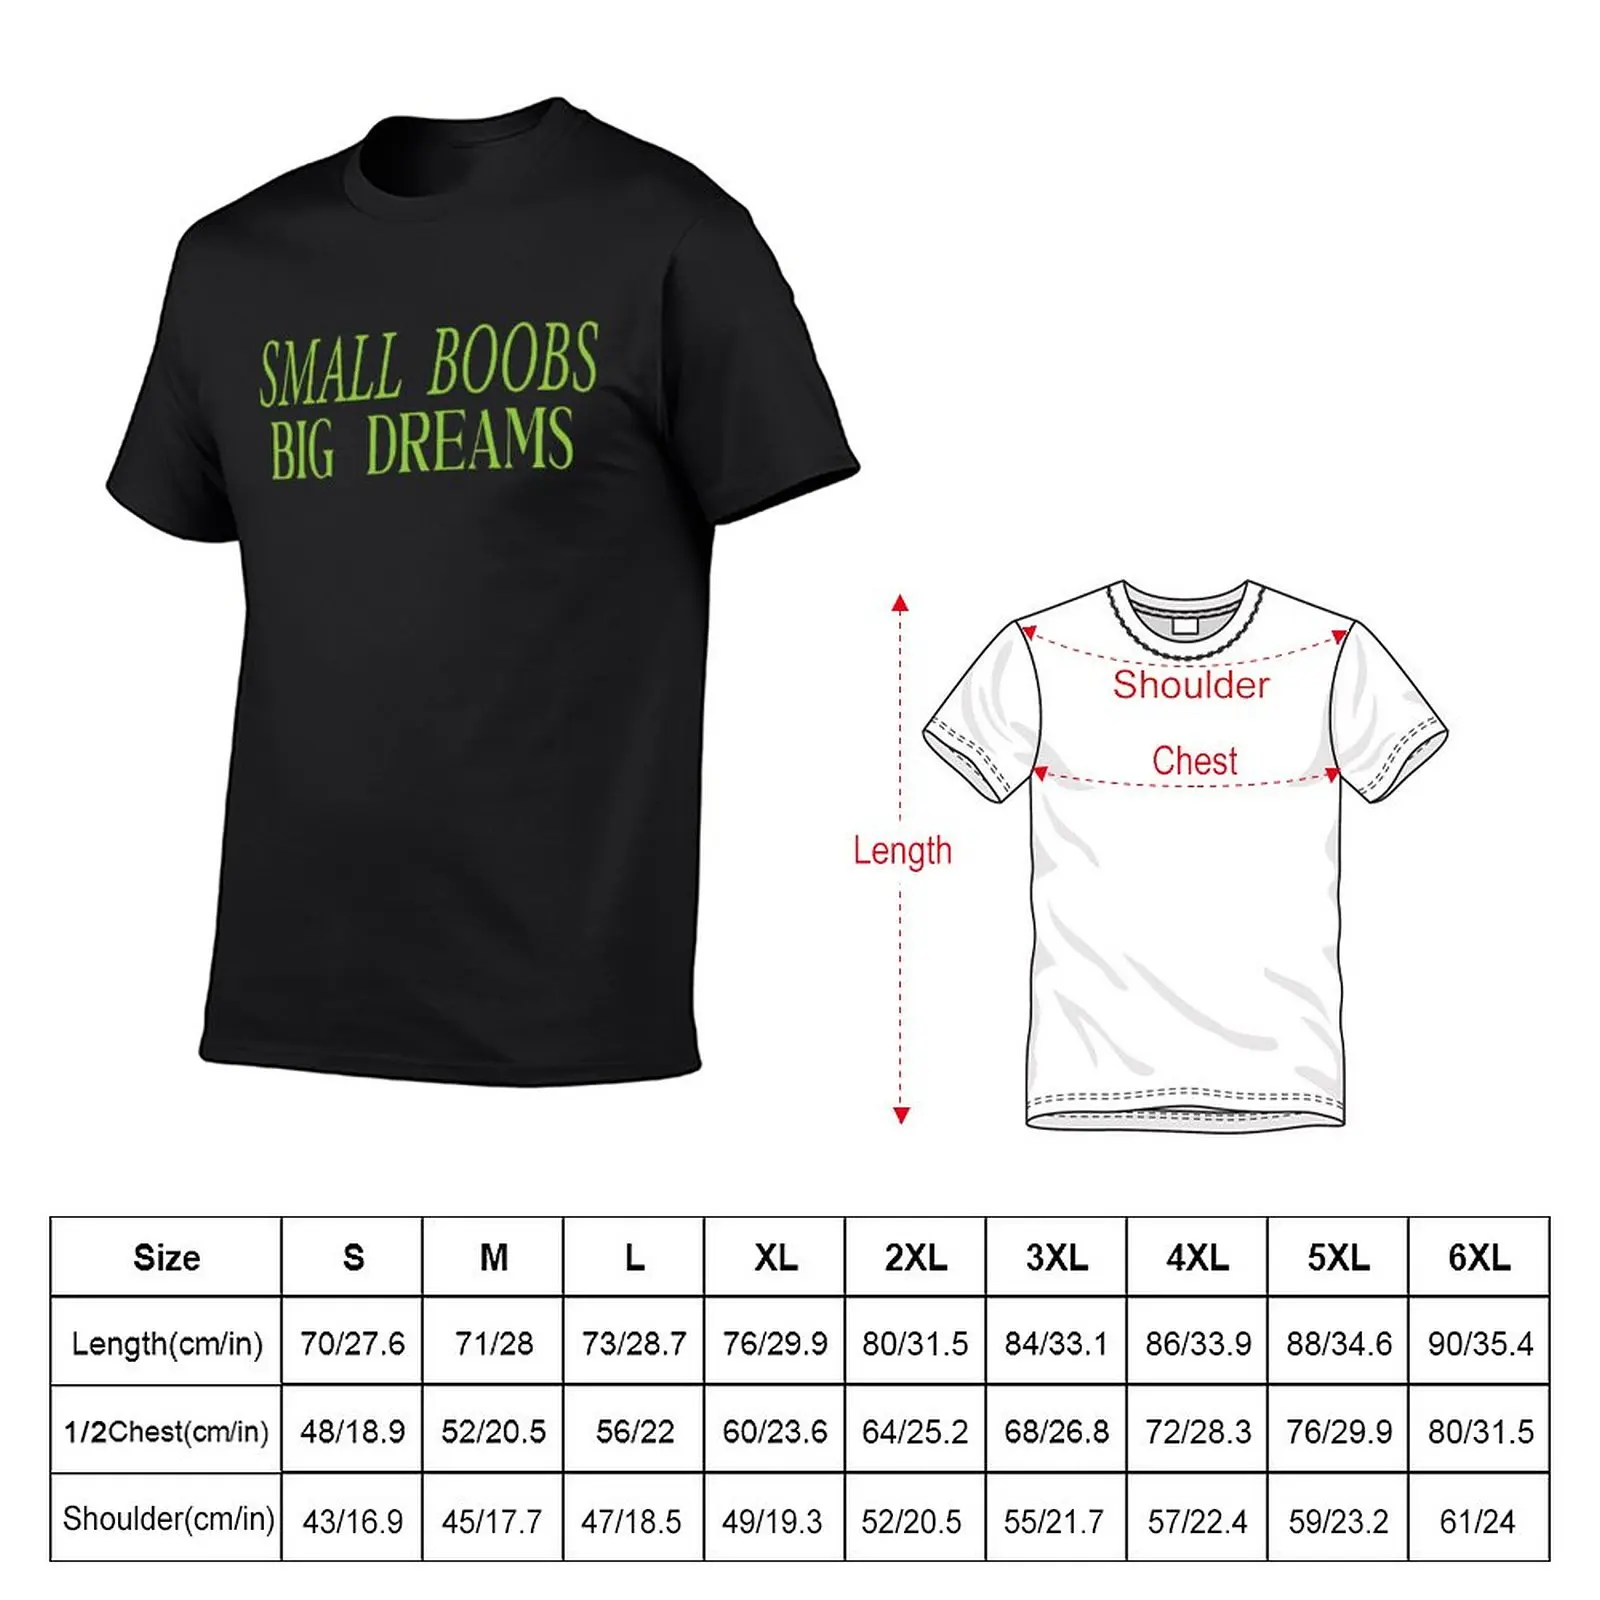 https://ae01.alicdn.com/kf/S90e56ce79e494f51ad8fb87cf20c6e0di/New-small-boobs-big-dreams-T-Shirt-custom-t-shirts-design-your-own-tees-mens-graphic.jpg